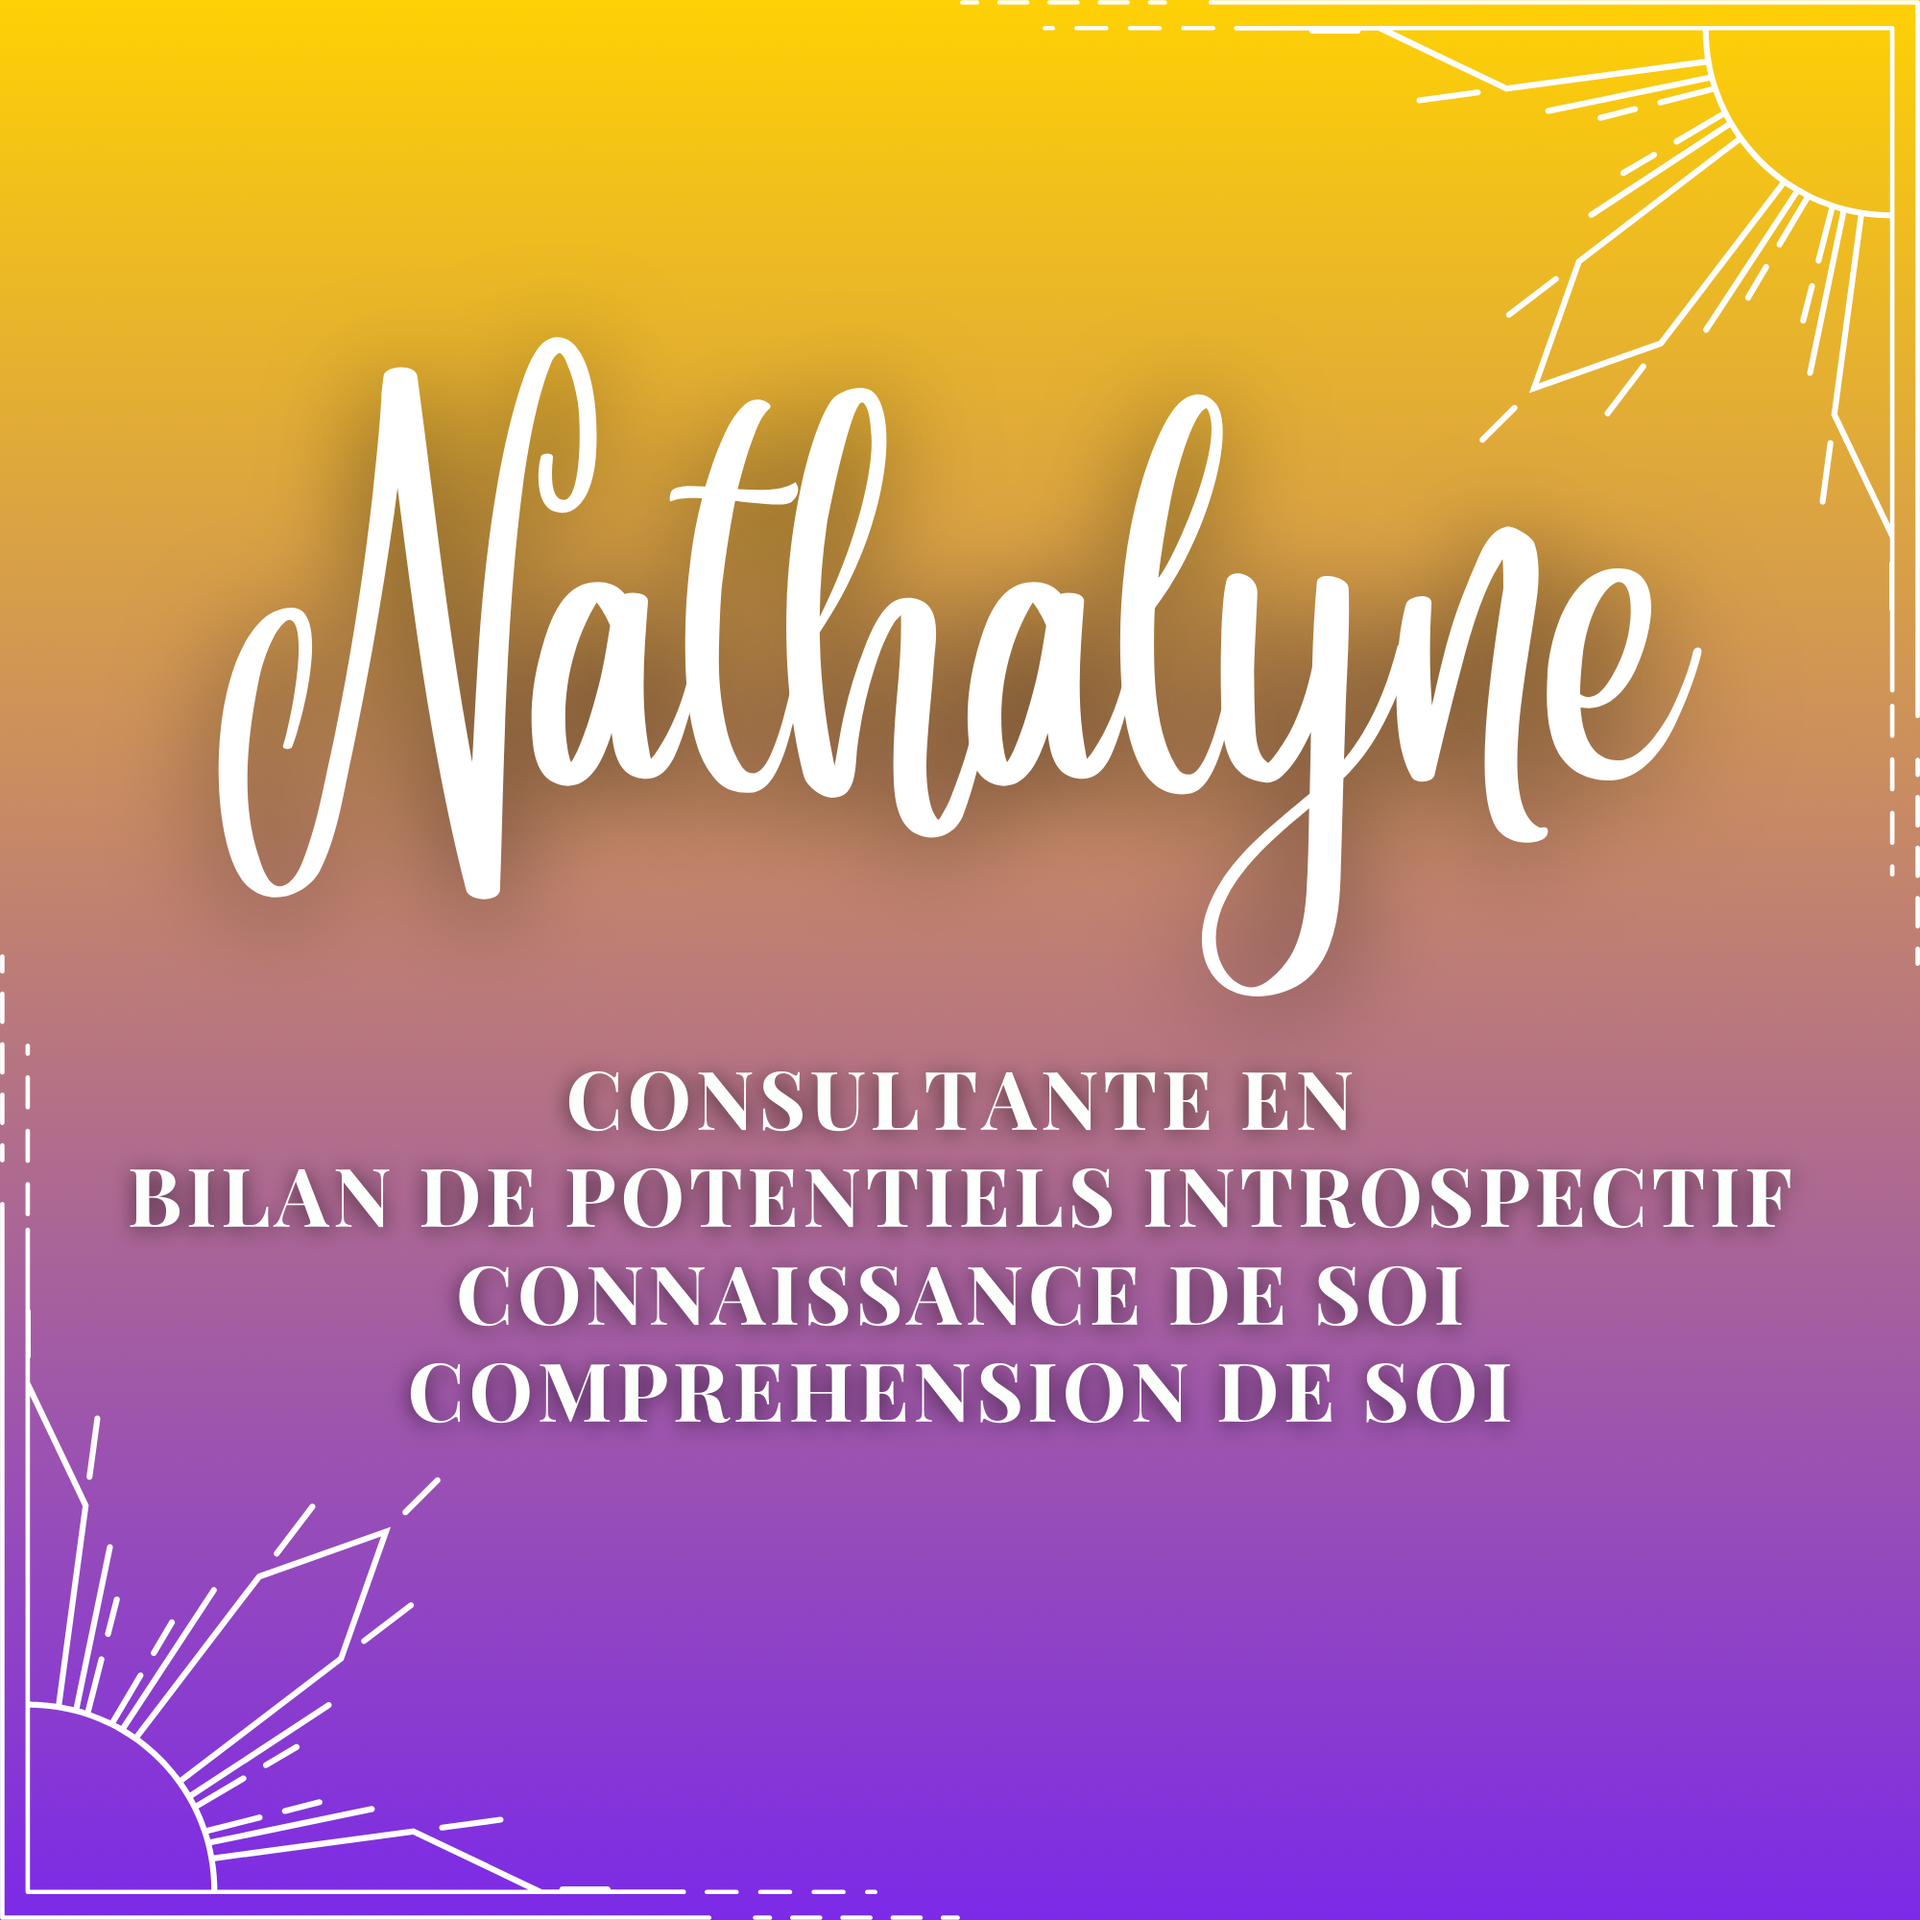 Nathalie COUTENAY ta consultante en Bilan de Potentiels Introspectif Nathalyne, connaissance de soi et compréhension de soi.